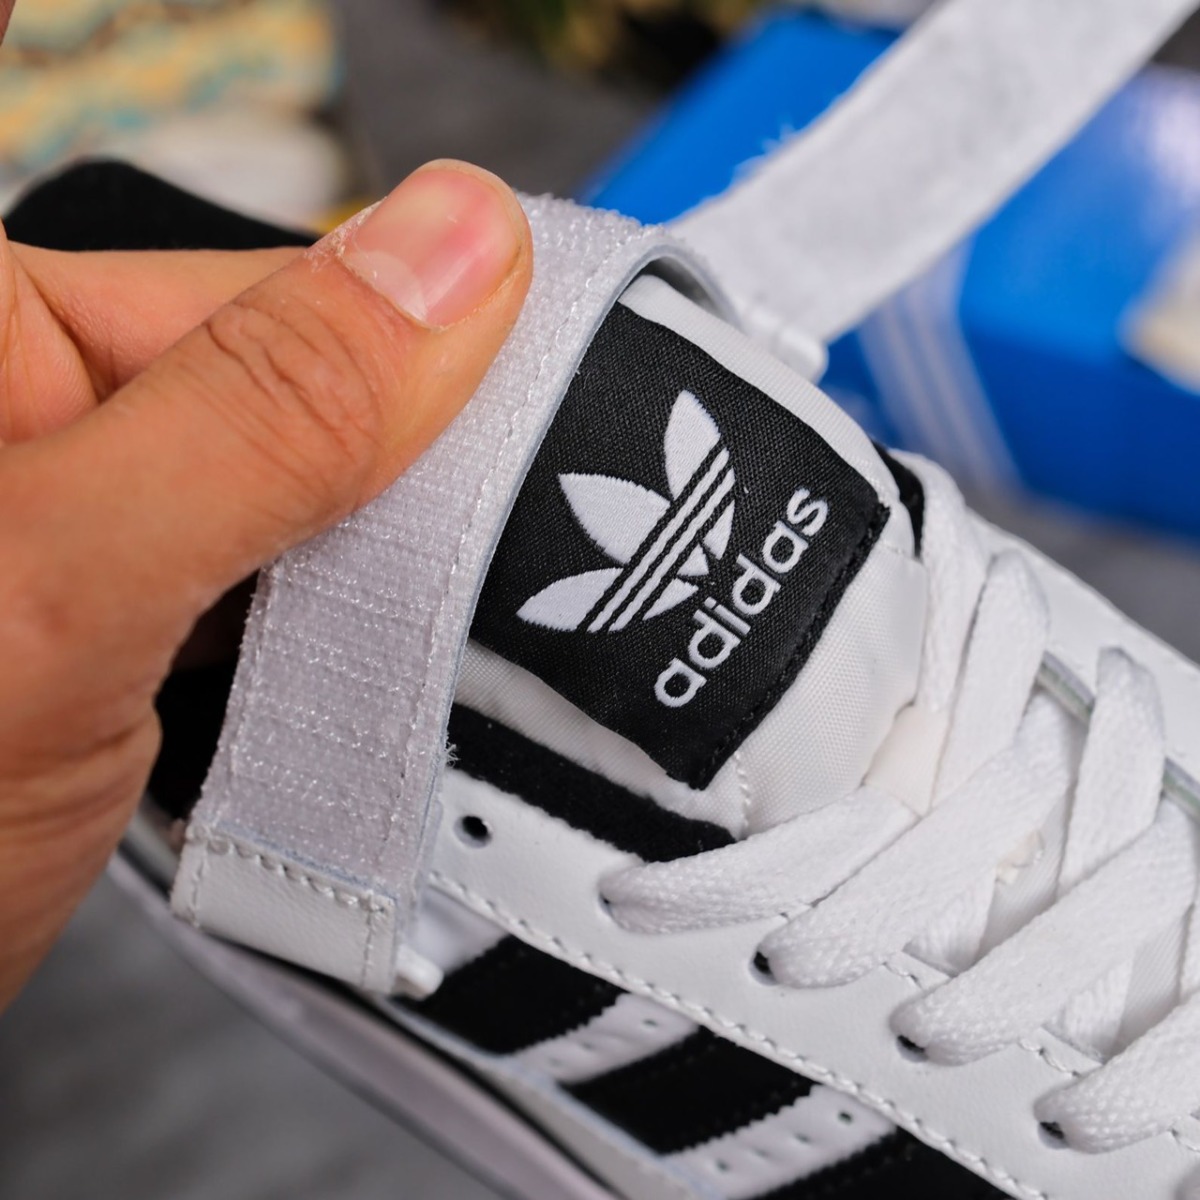 Giày Adidas Forum 84 cổ thấp đen trắng